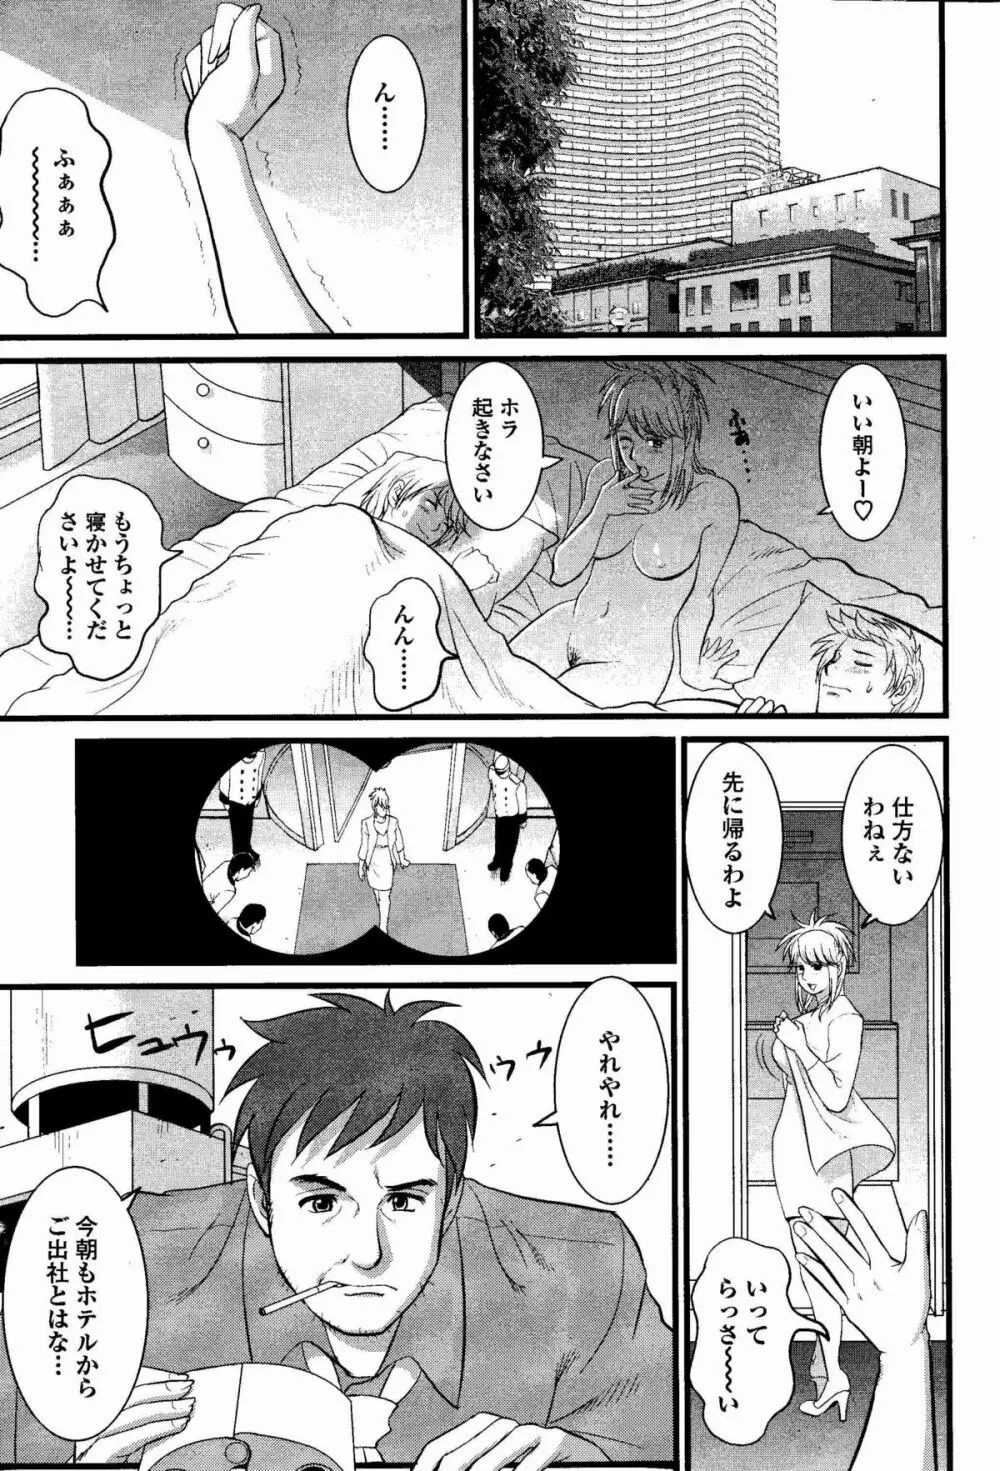 Haken no Muuko-san 7 6ページ